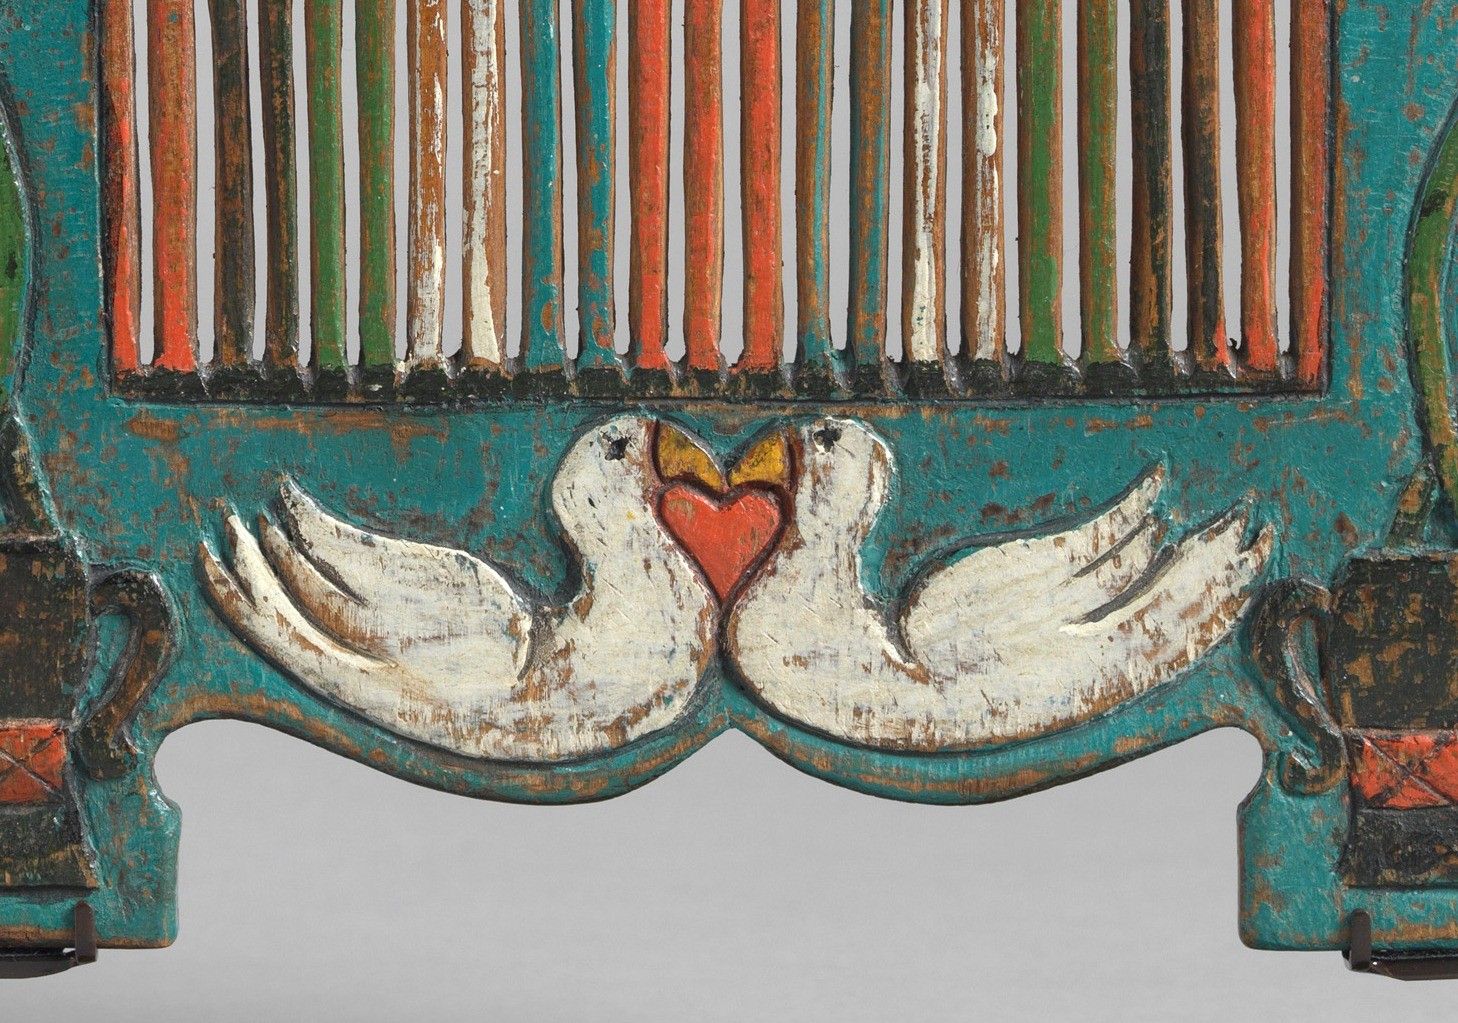 Exceptional  Early Folk Art Love Token Braid Loom